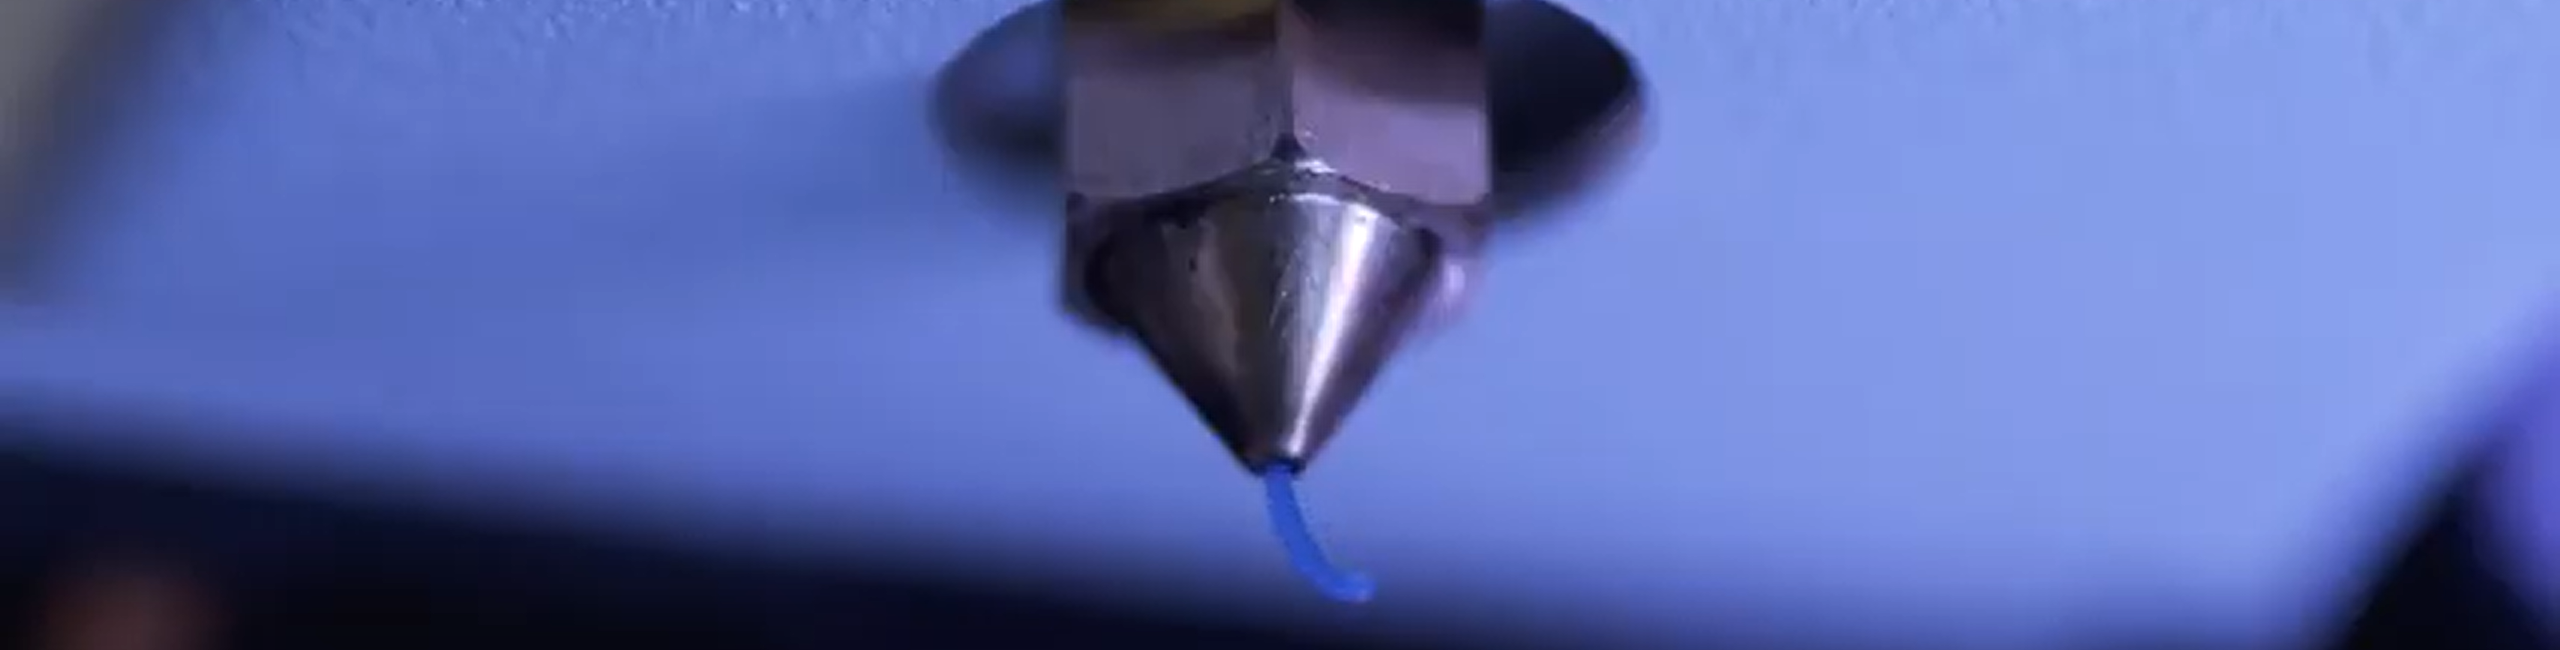 filament-purge